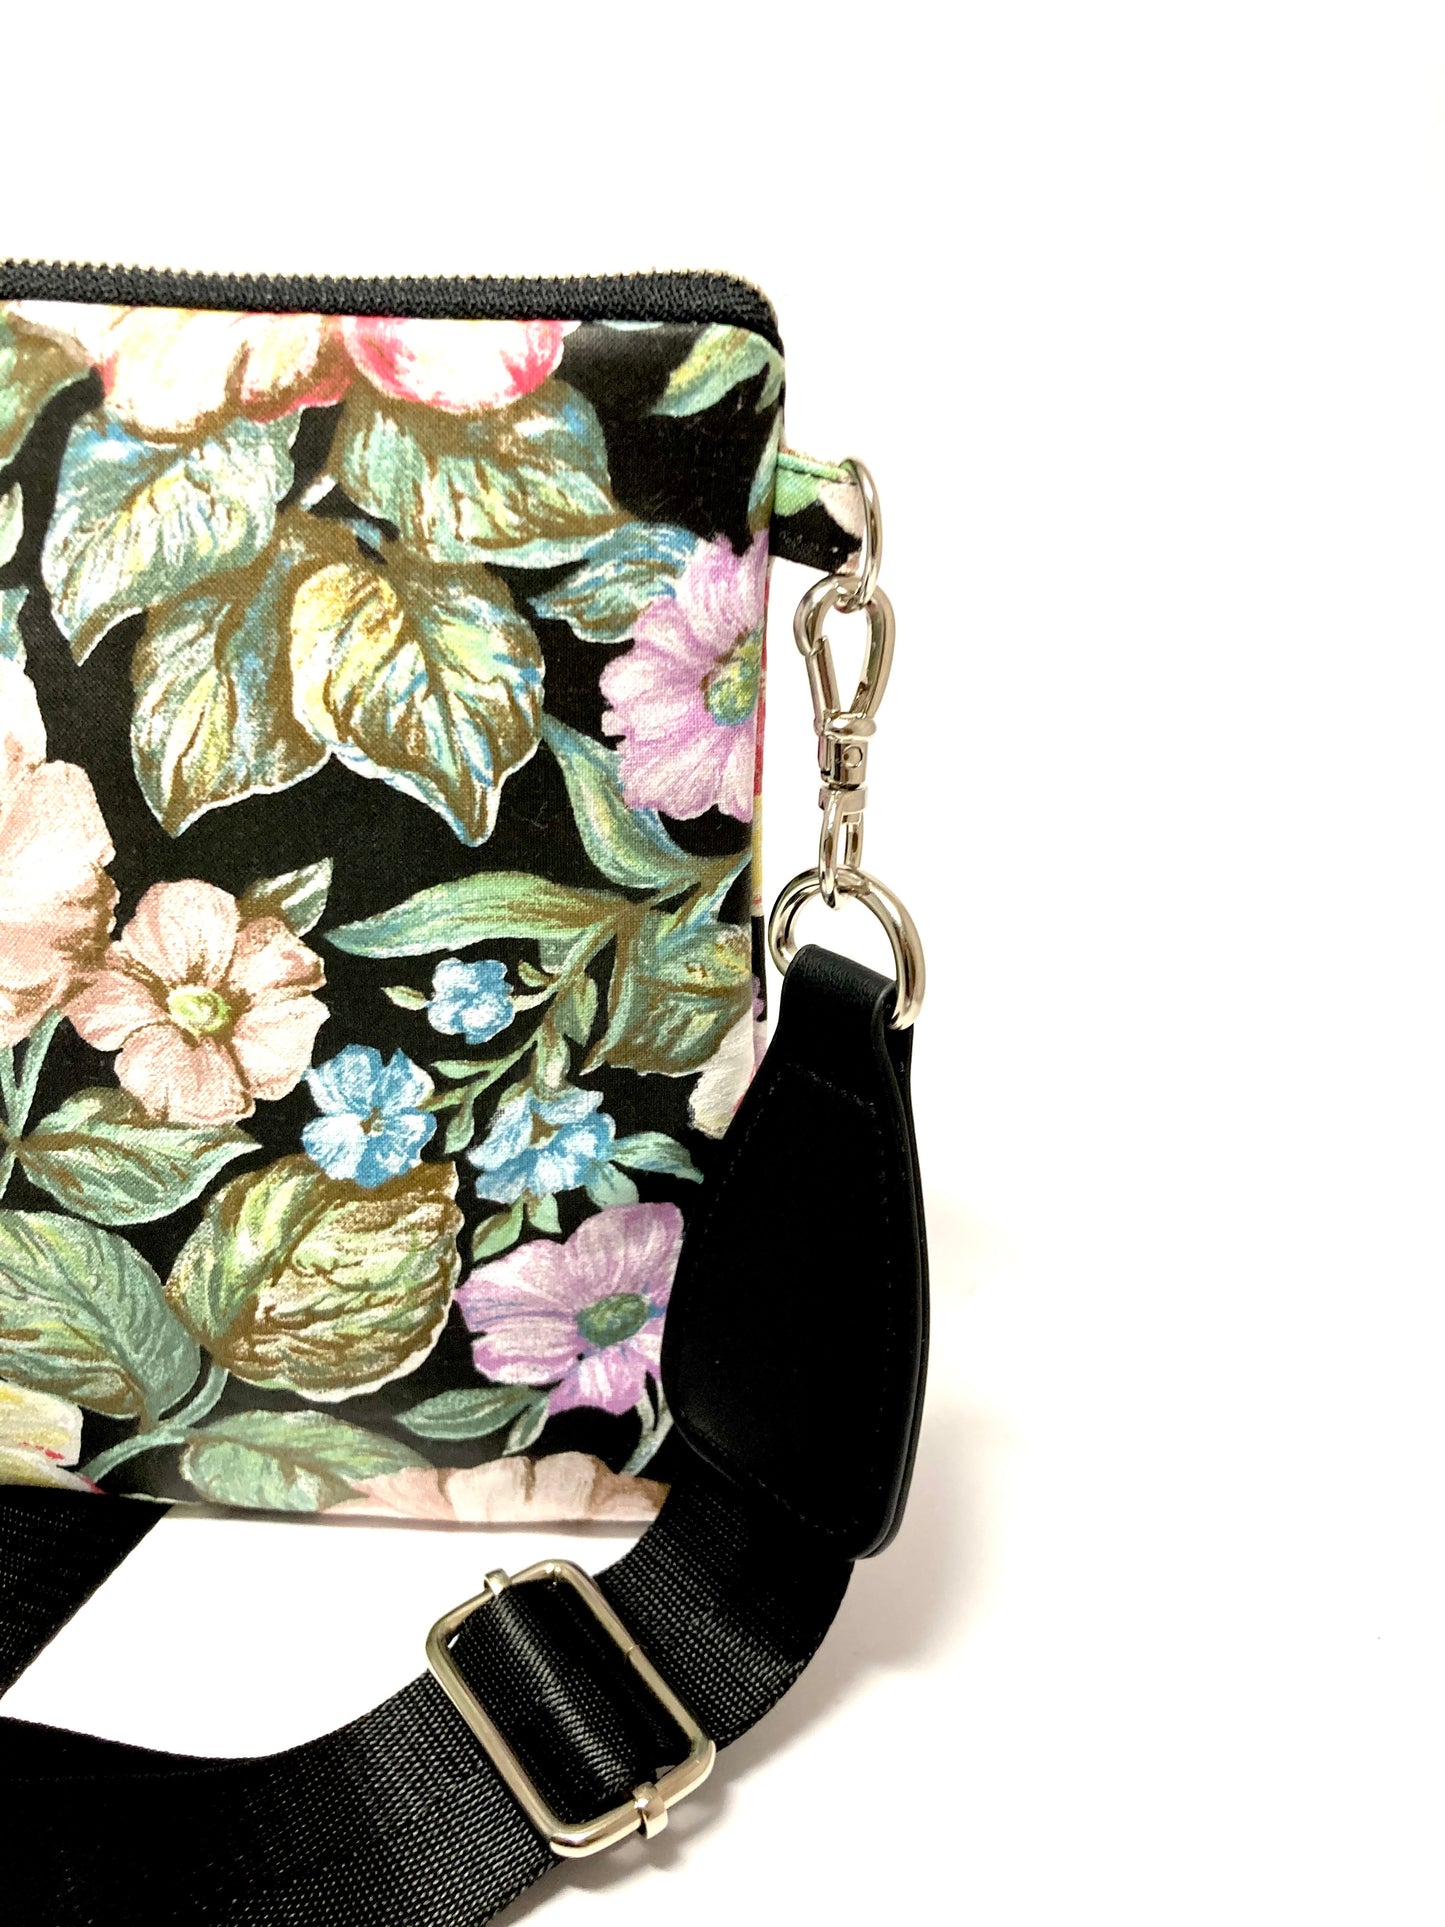 Floral crossbody bag with tassel